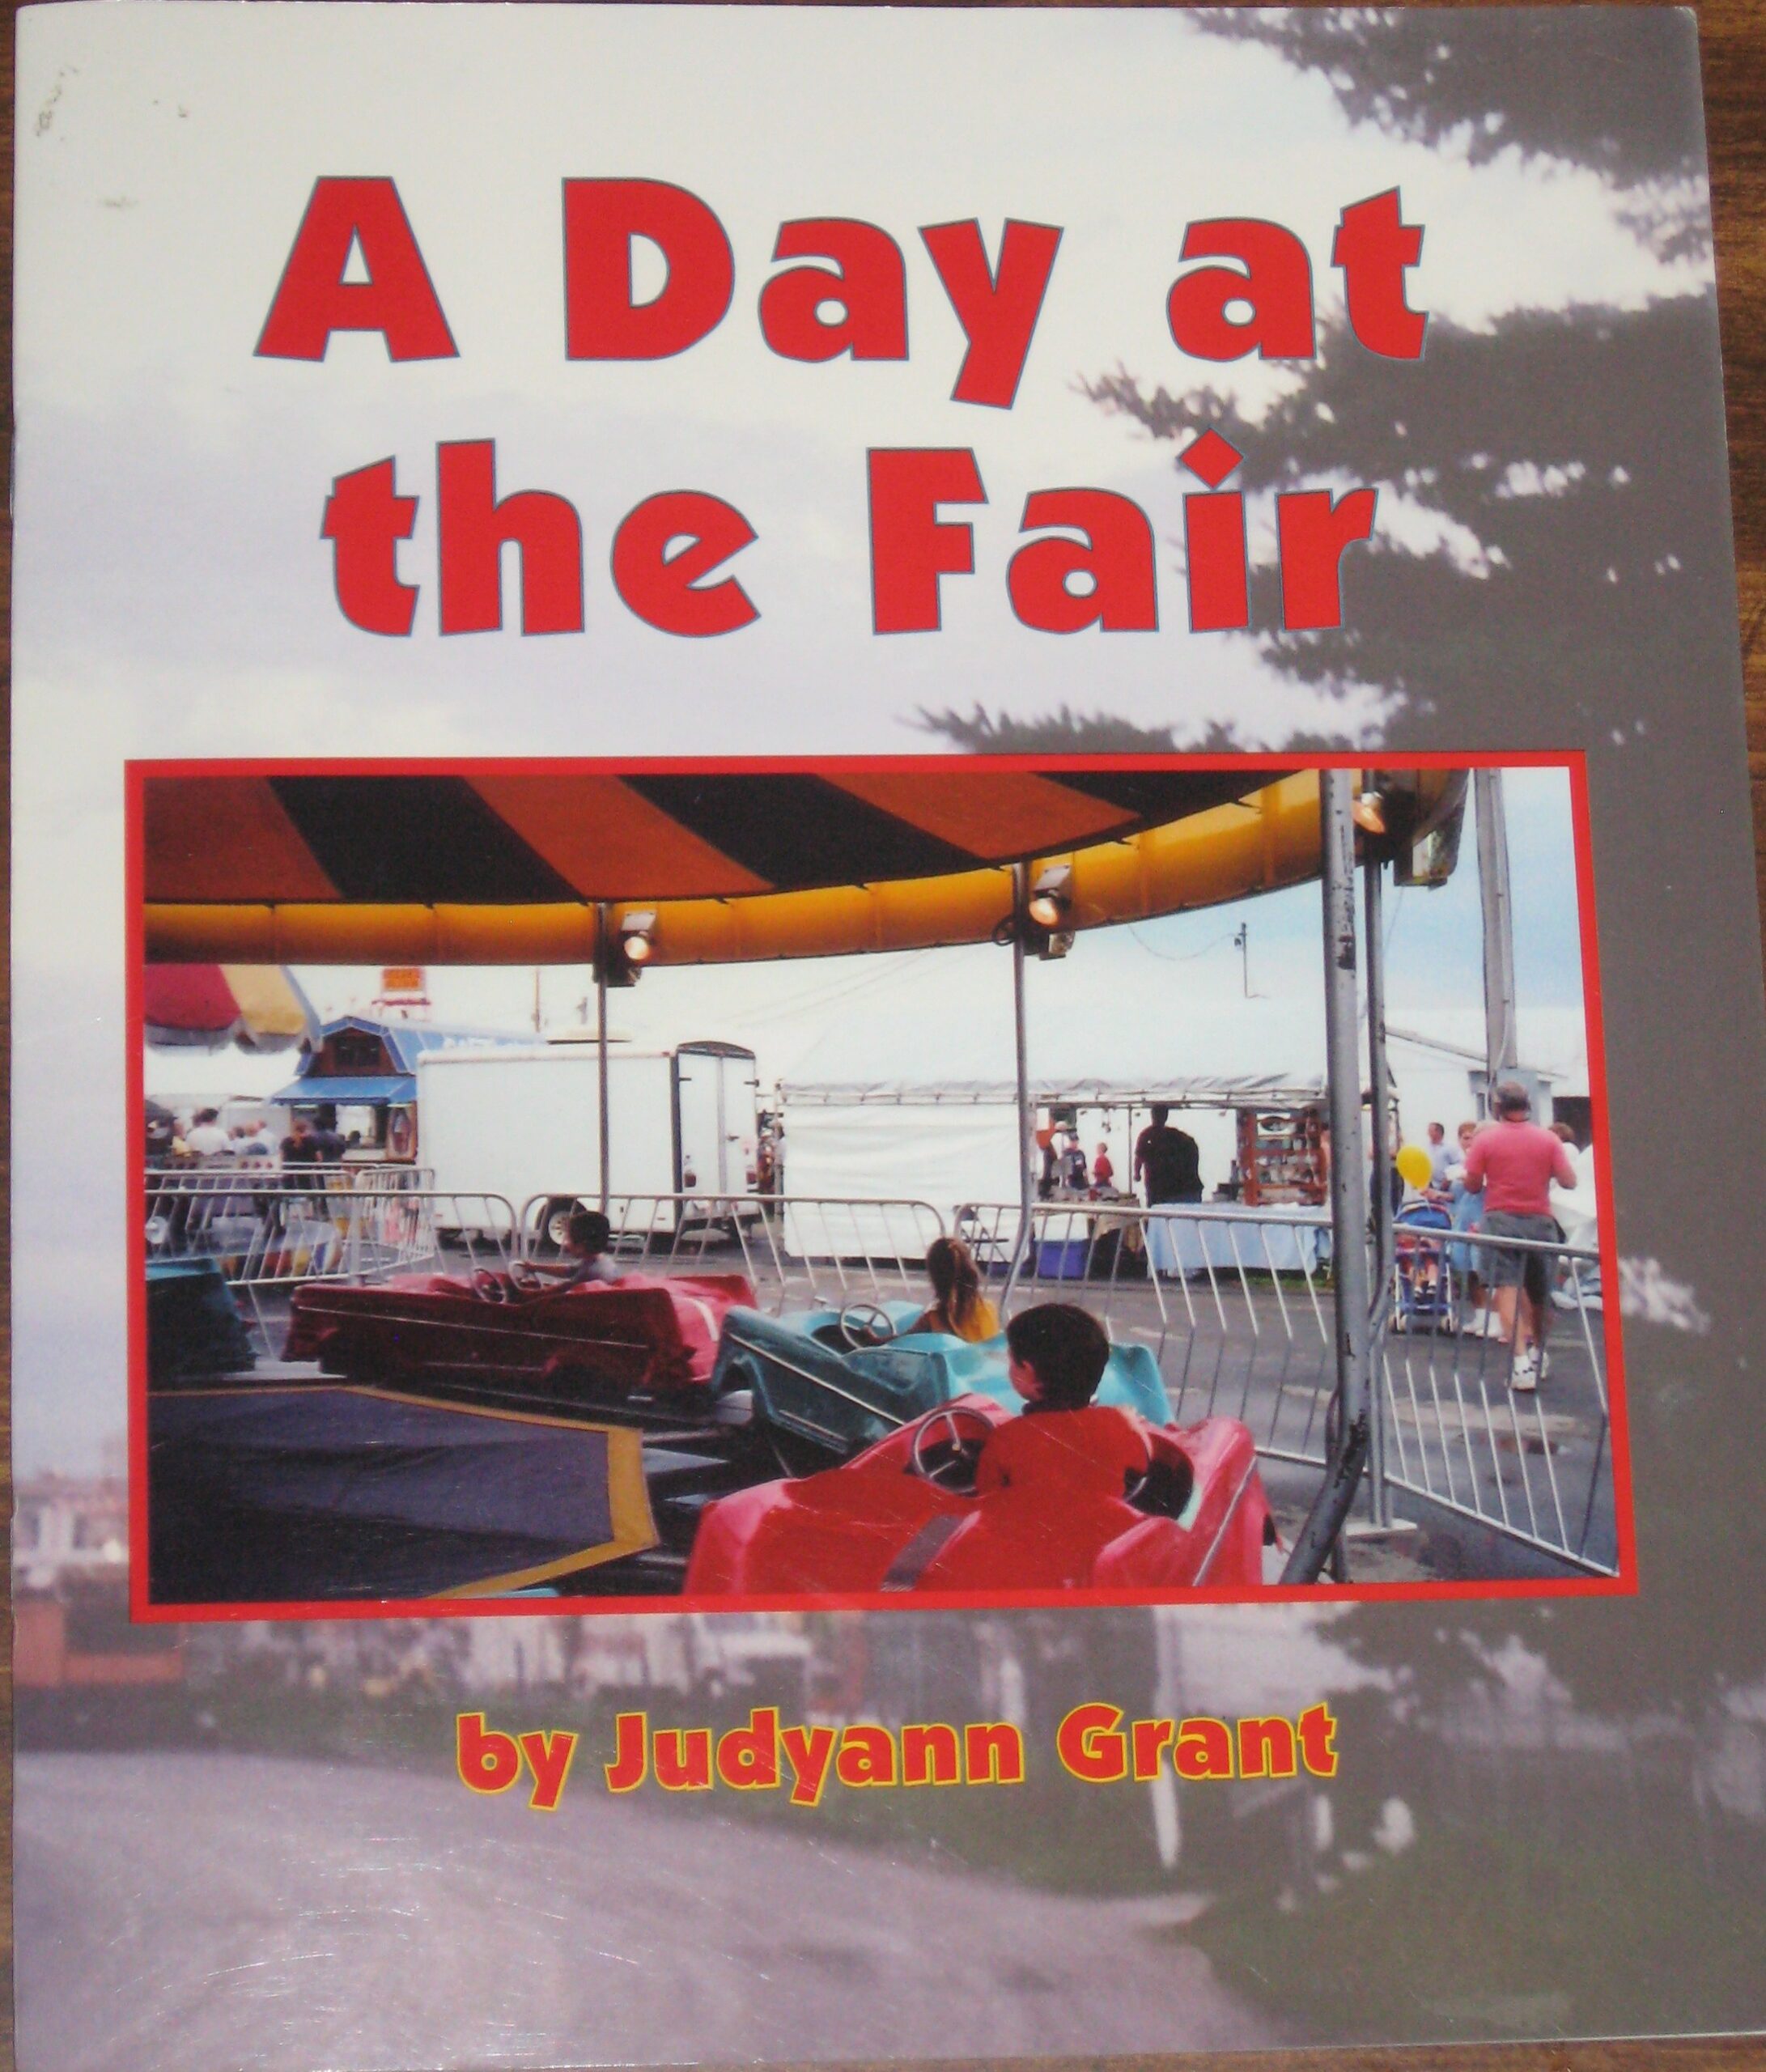 A Day at the Fair